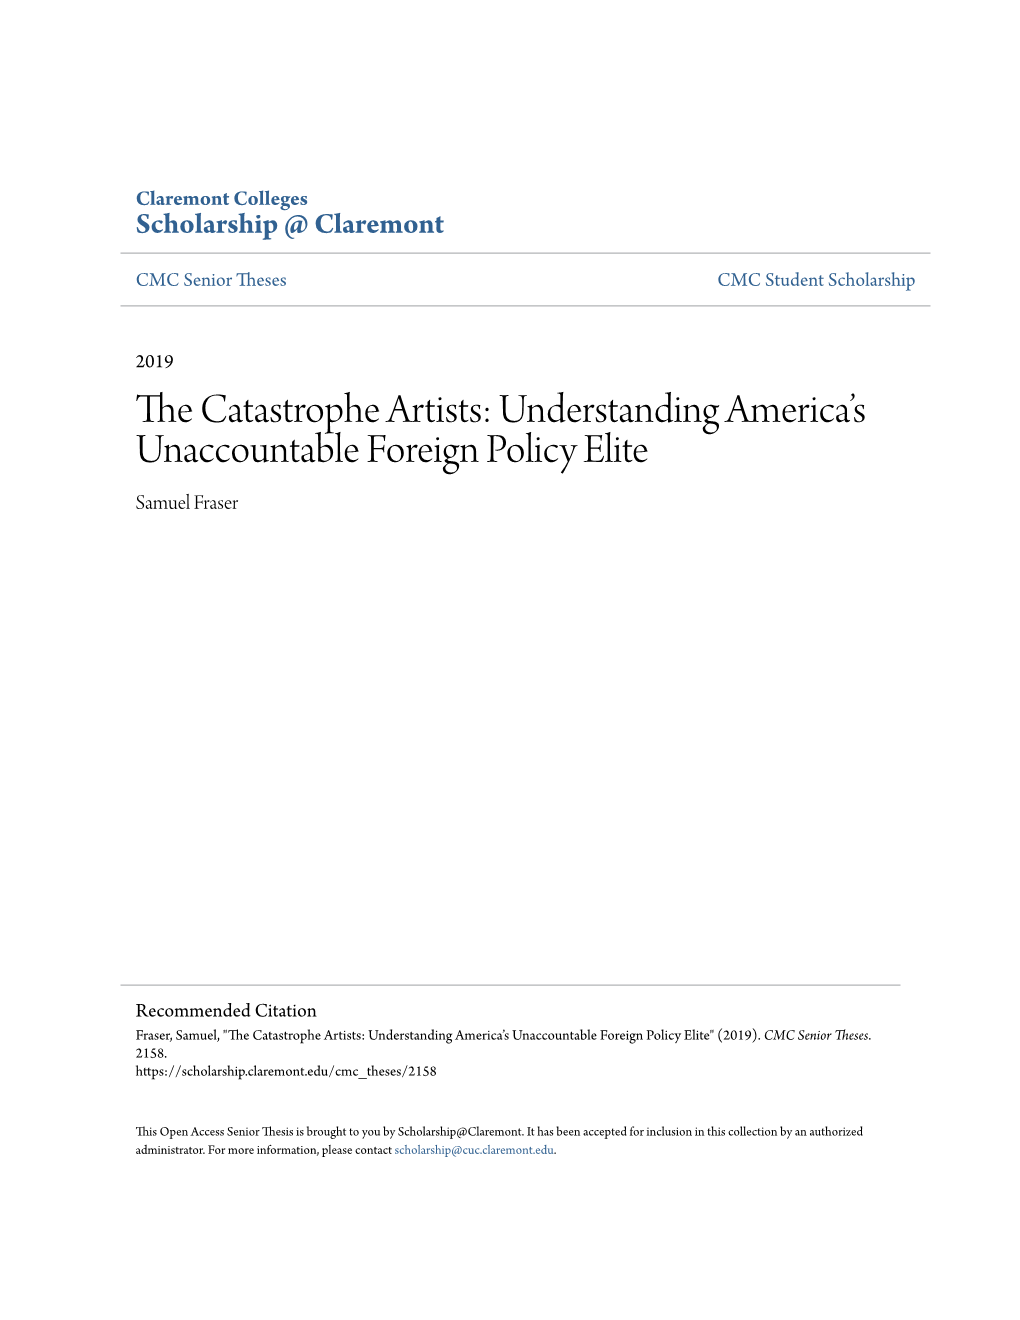 Understanding America's Unaccountable Foreign Policy Elite